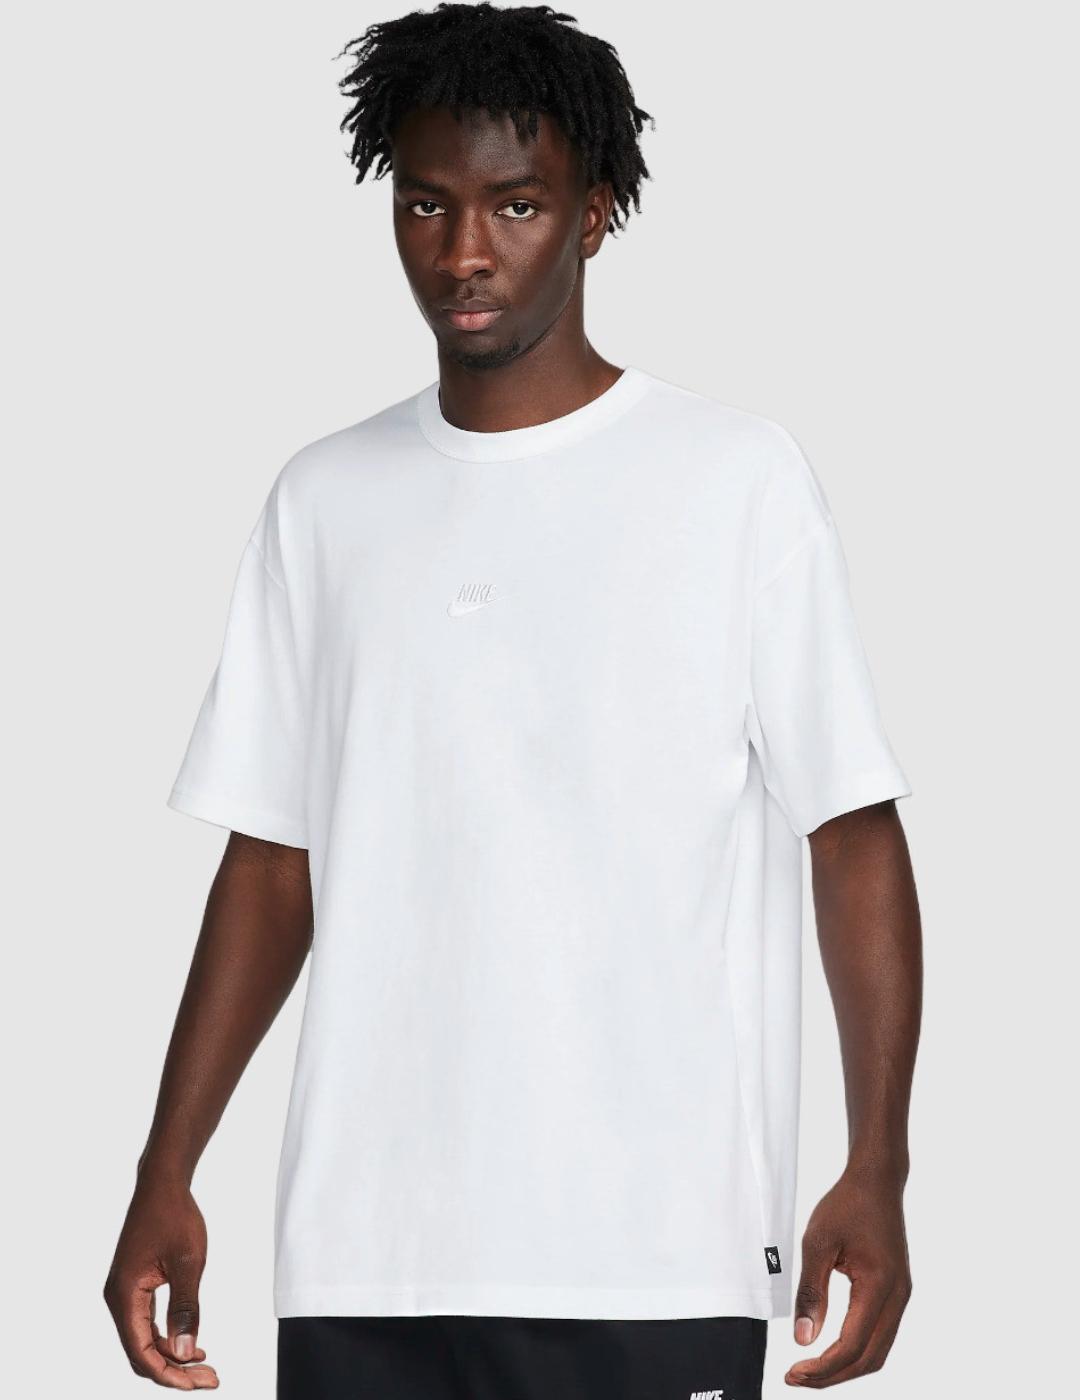 Camiseta Pepe Jeans blanco roto Wido hombre